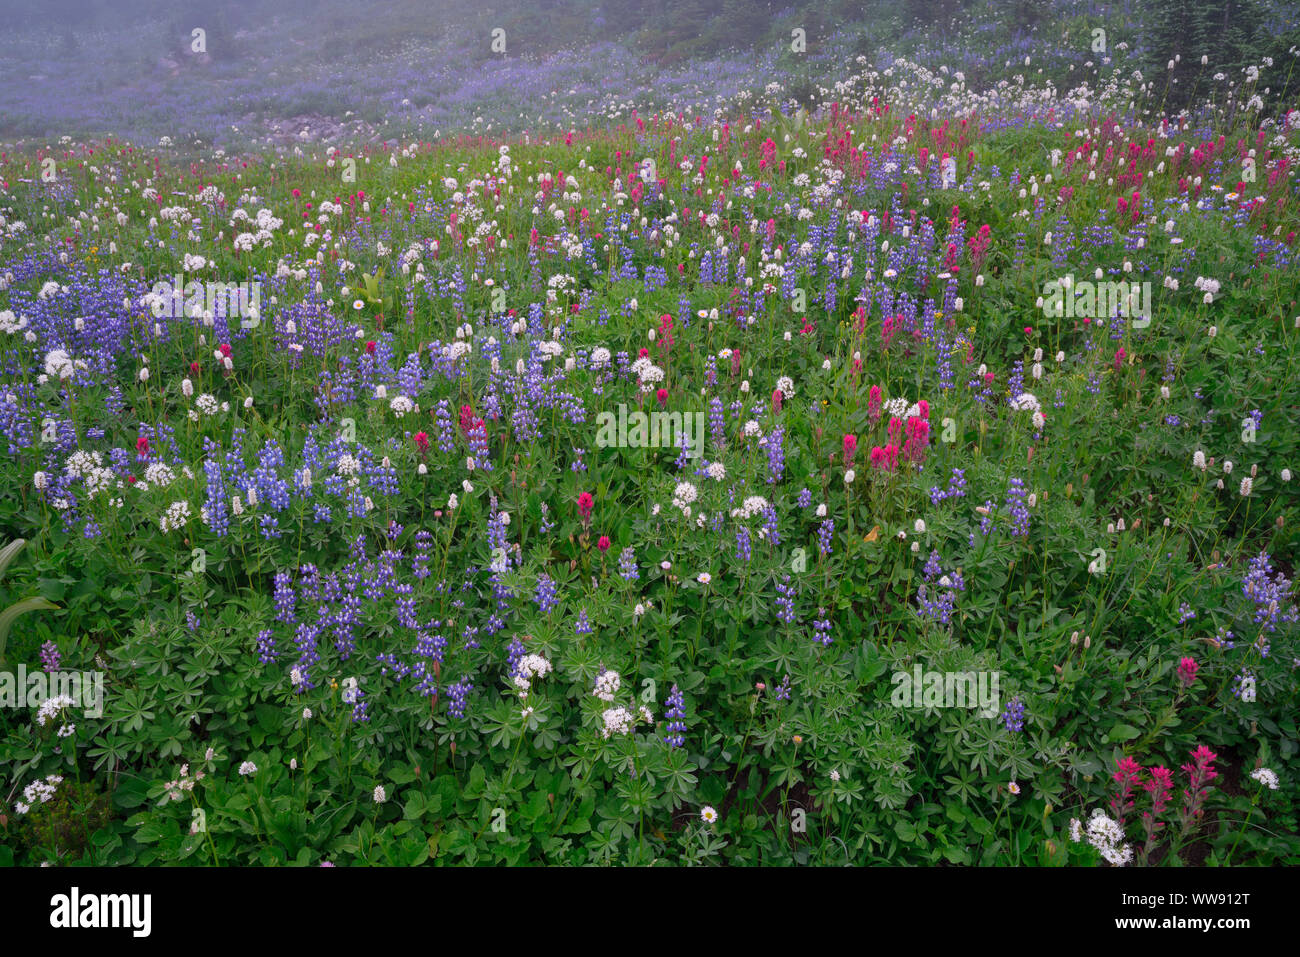 A burst of colors among the summer wildflowers blooming along Mazama Ridge in Washington’s Mount Rainier National Park. Stock Photo